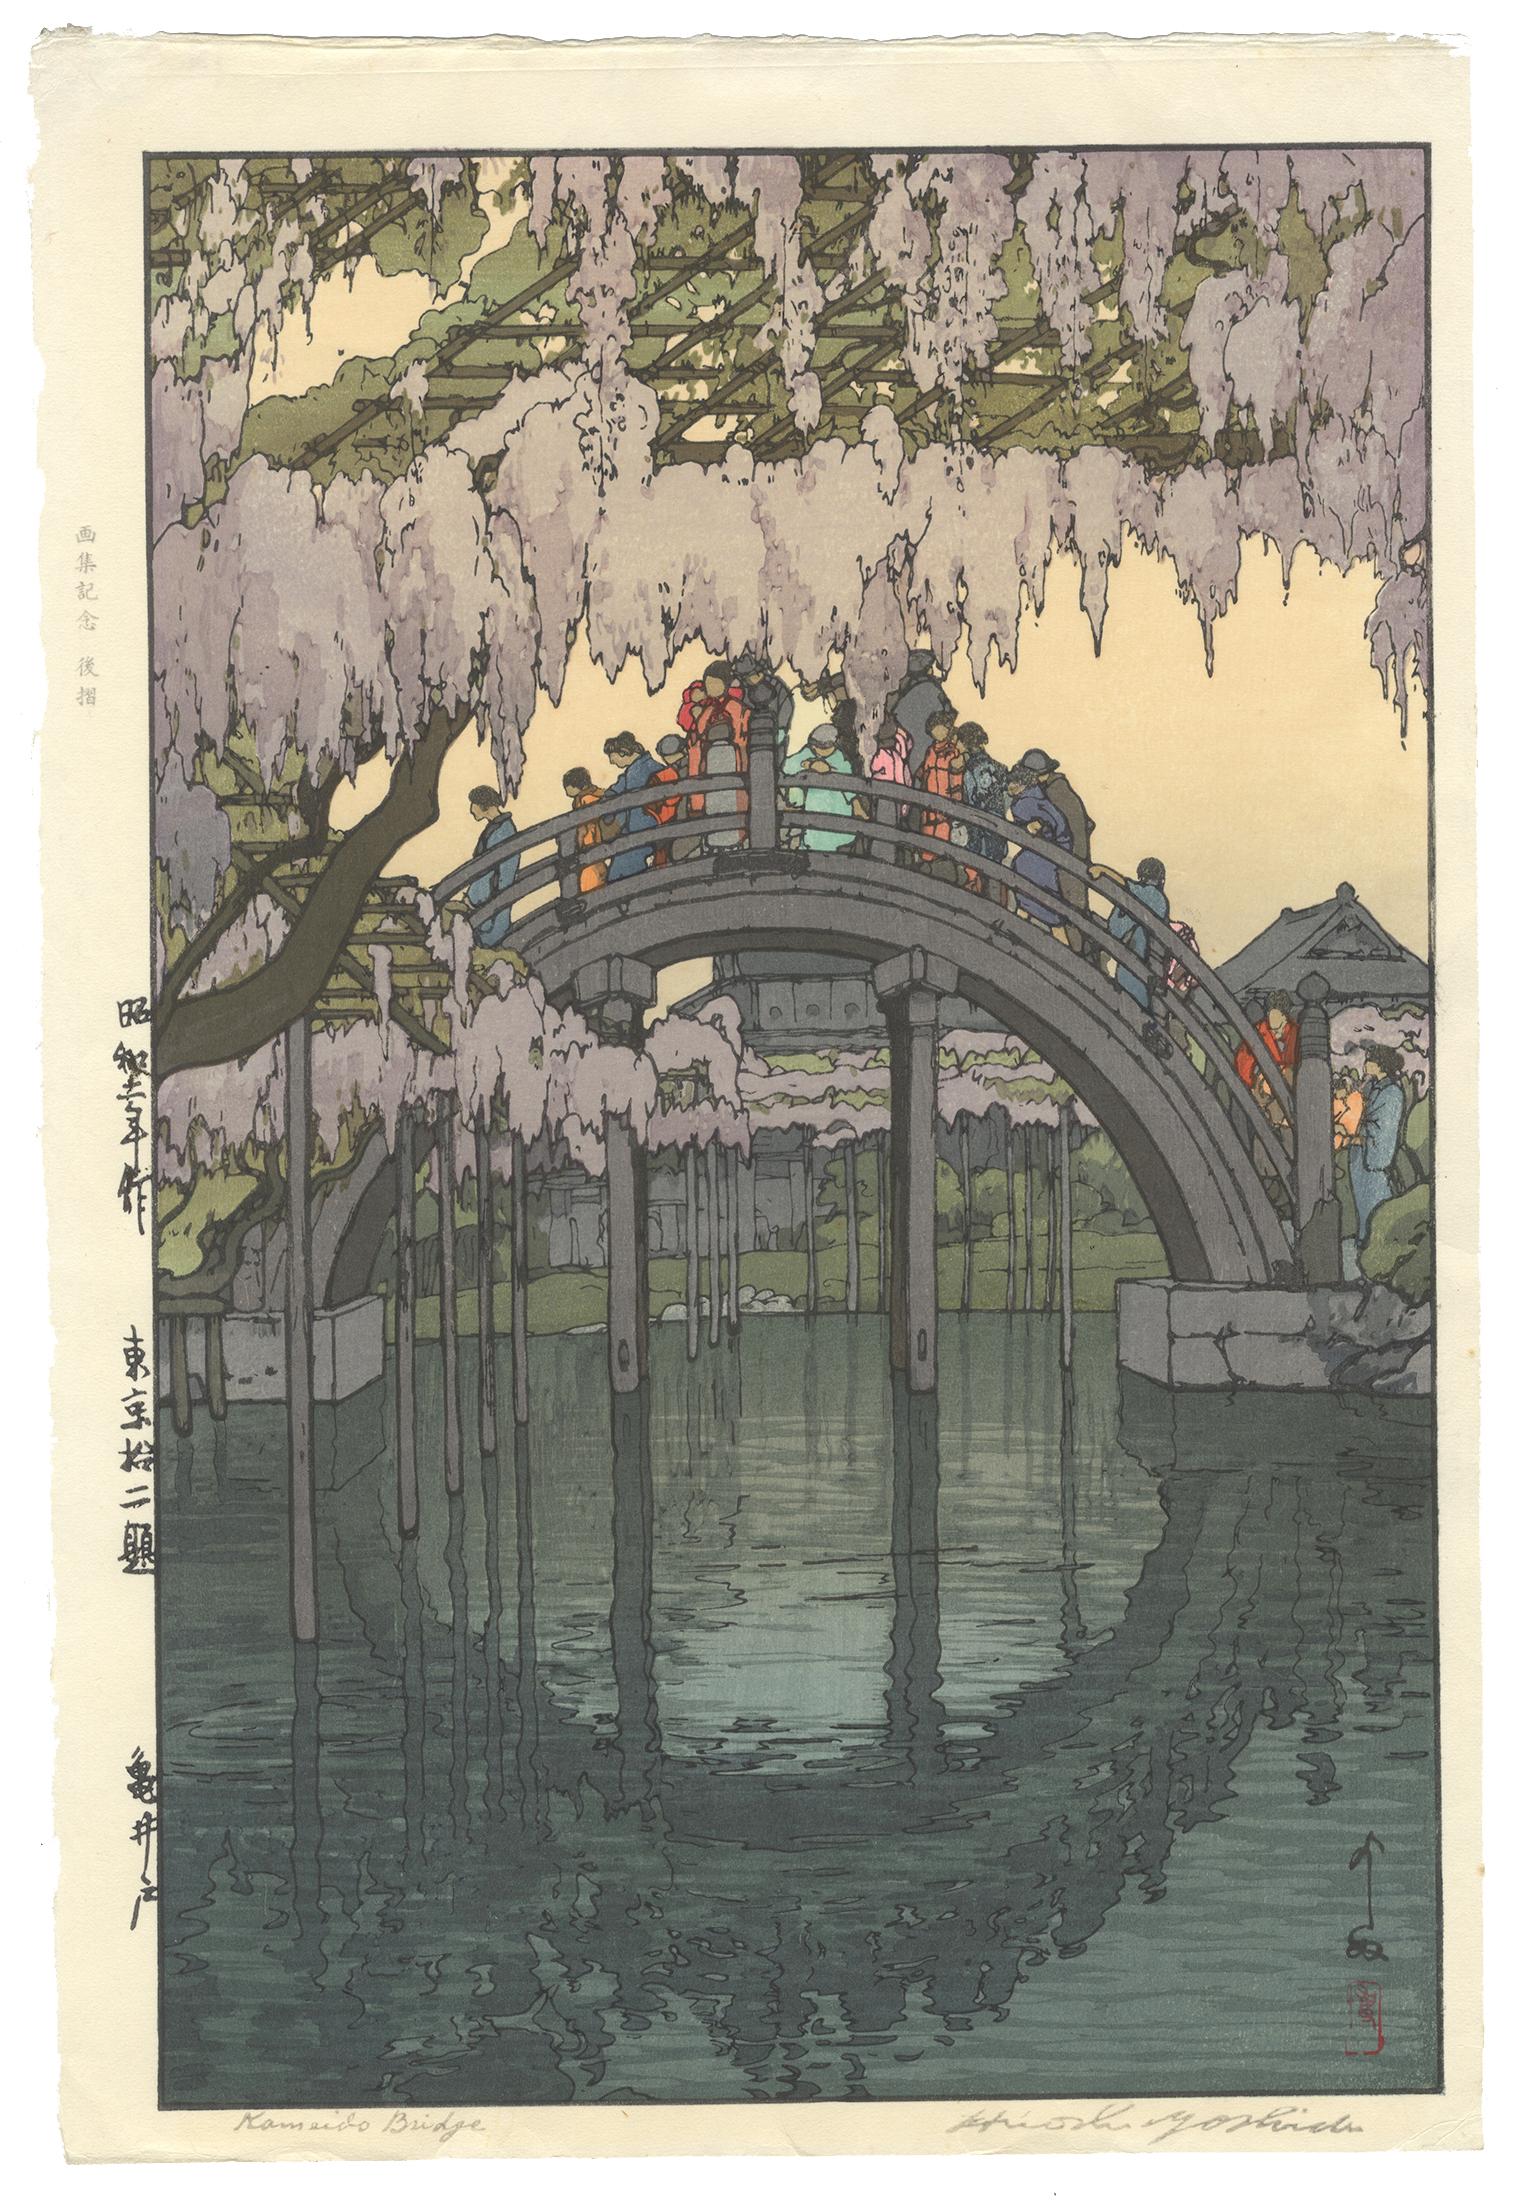 Artist: Hiroshi Yoshida (1876-1950))
Title: Kameido Bridge
Series: Twelve Scenes of Tokyo
Date: Originally published in 1936 [later edition]
Dimensions: 27.5 x 40.5 cm

Wisteria drapes around the trellises of the Kameido Tenjin Shrine. In early